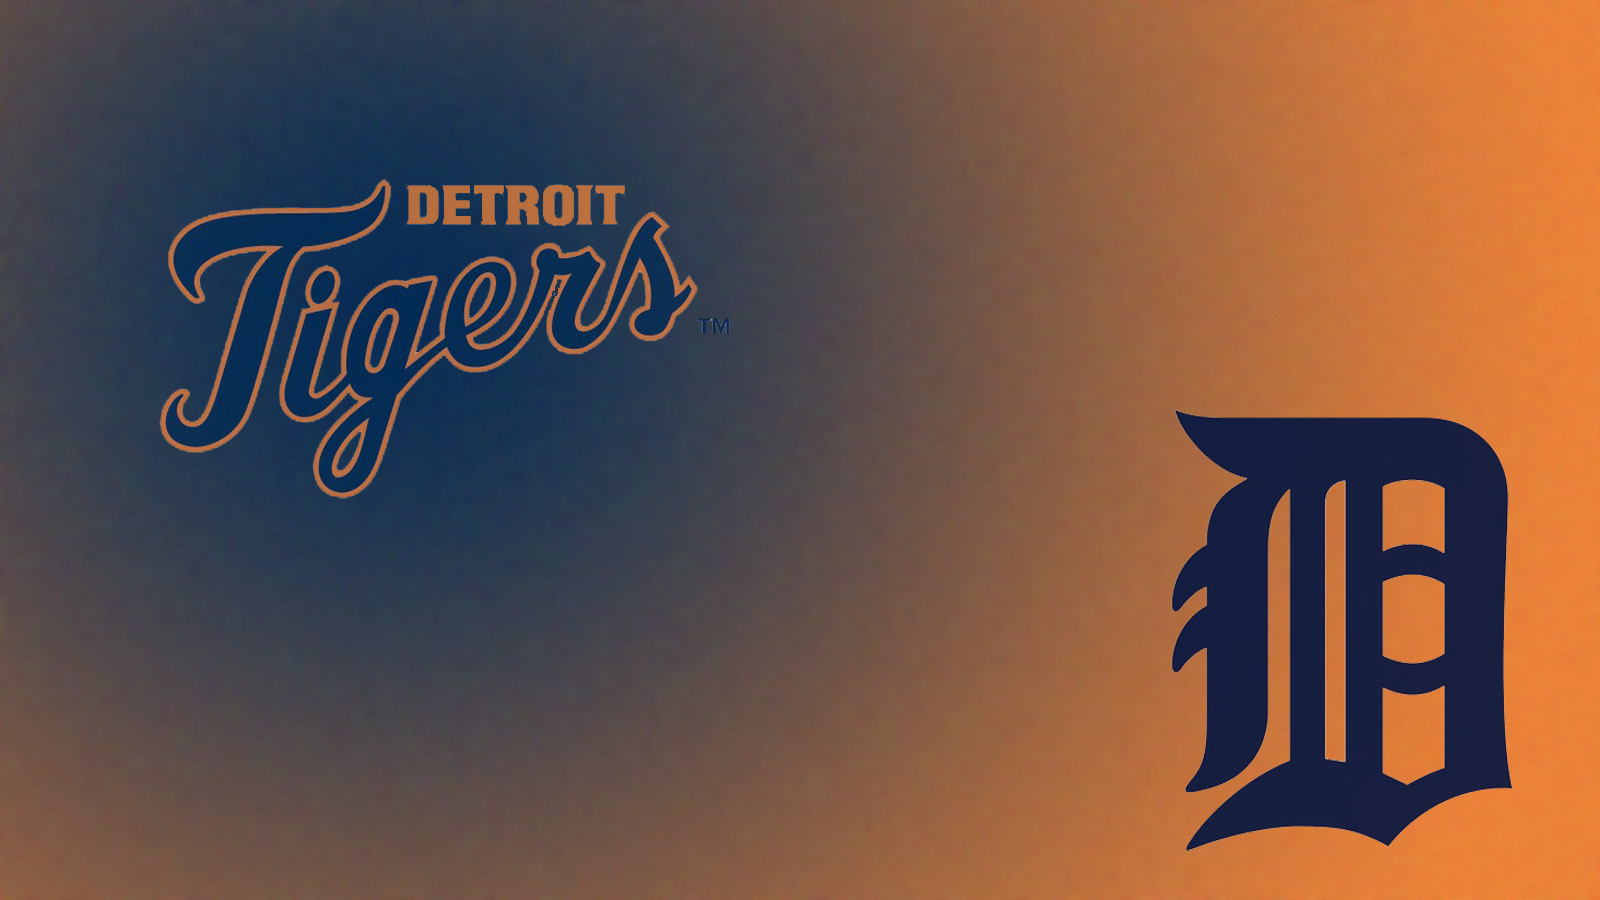 MLB Detroit Tigers wallpaper HD. Free desktop background 2016 in ...